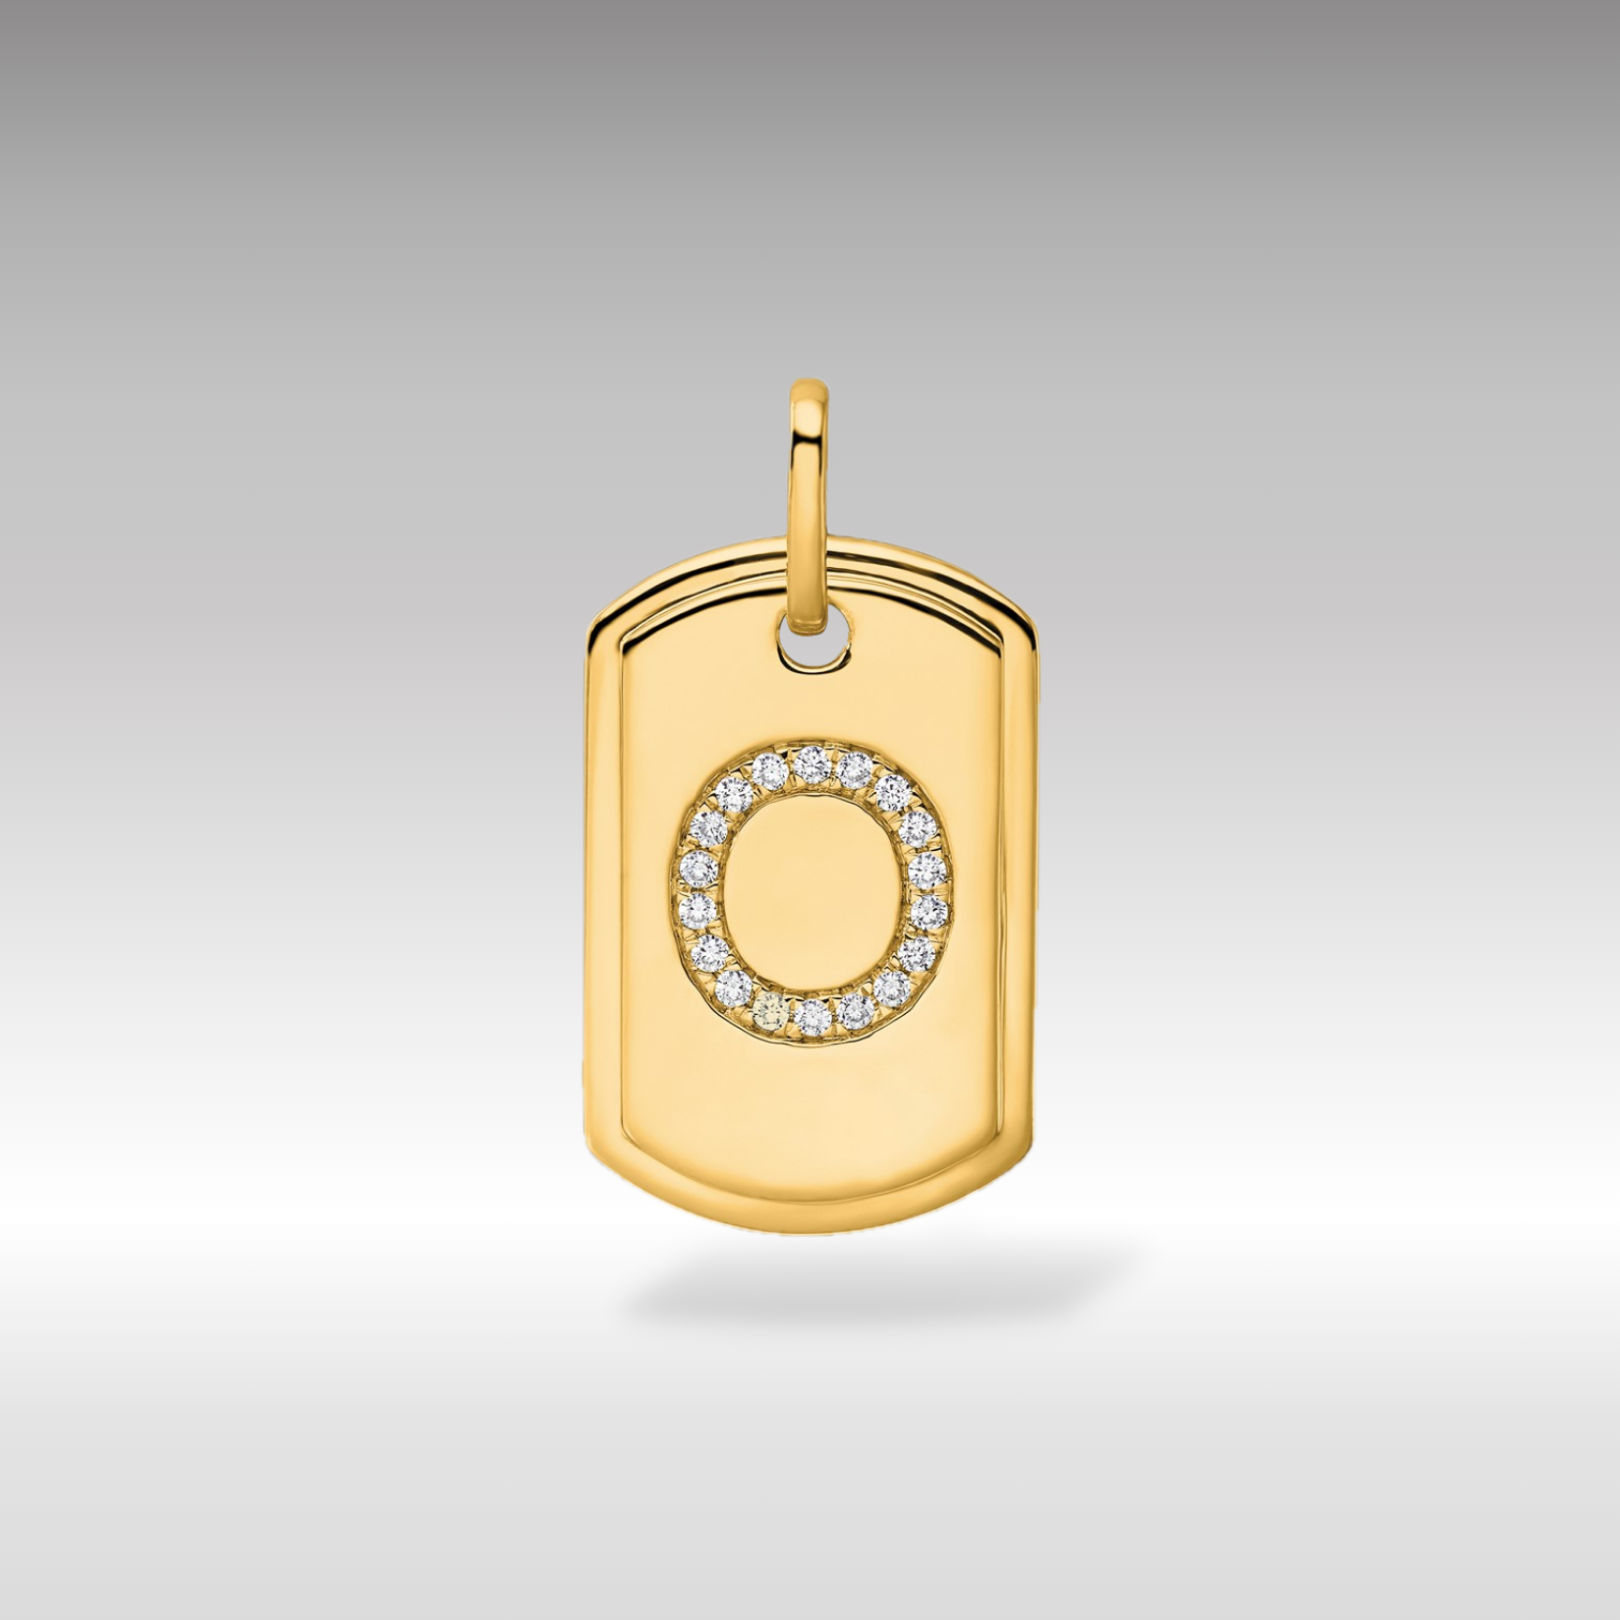 14K Gold Initial "O" Dog Tag With Genuine Diamonds - Charlie & Co. Jewelry